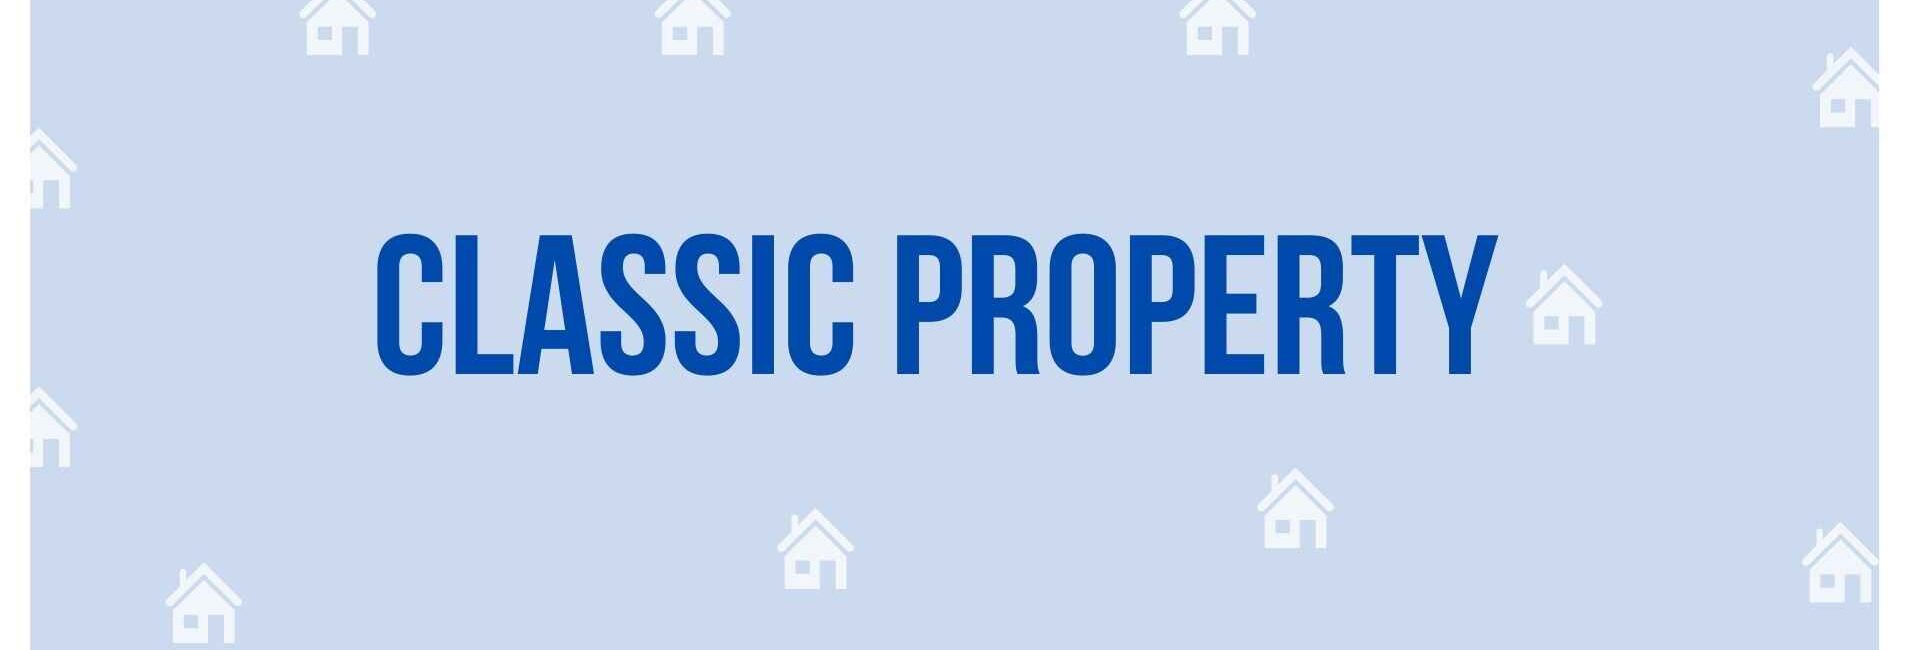 Classic Property - Property Dealer in Noida